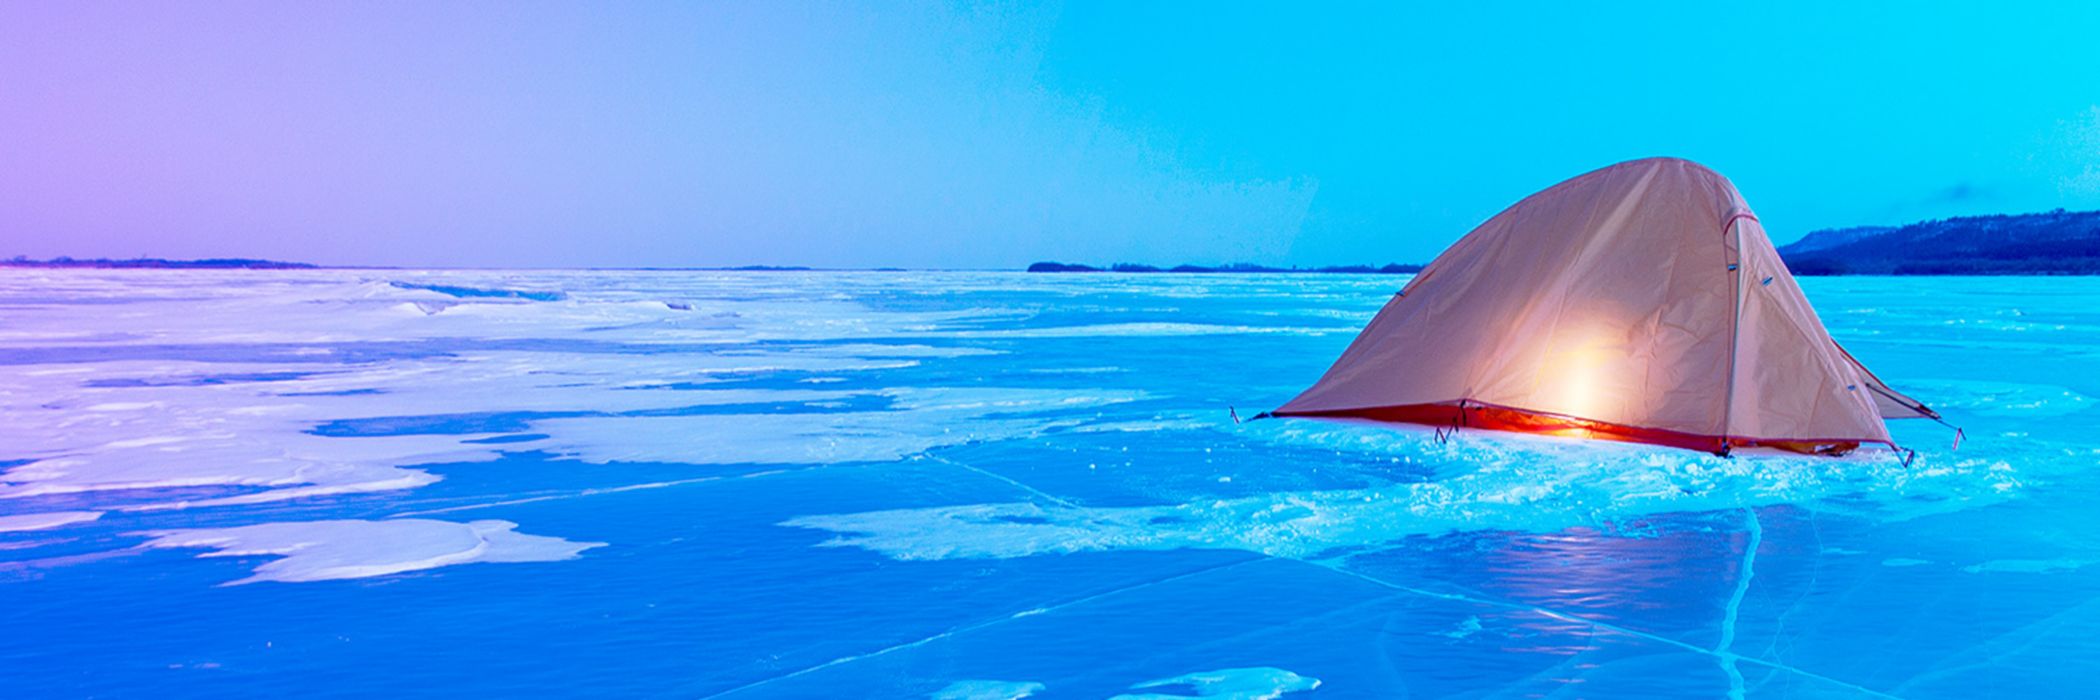 Tent on a frozen lake